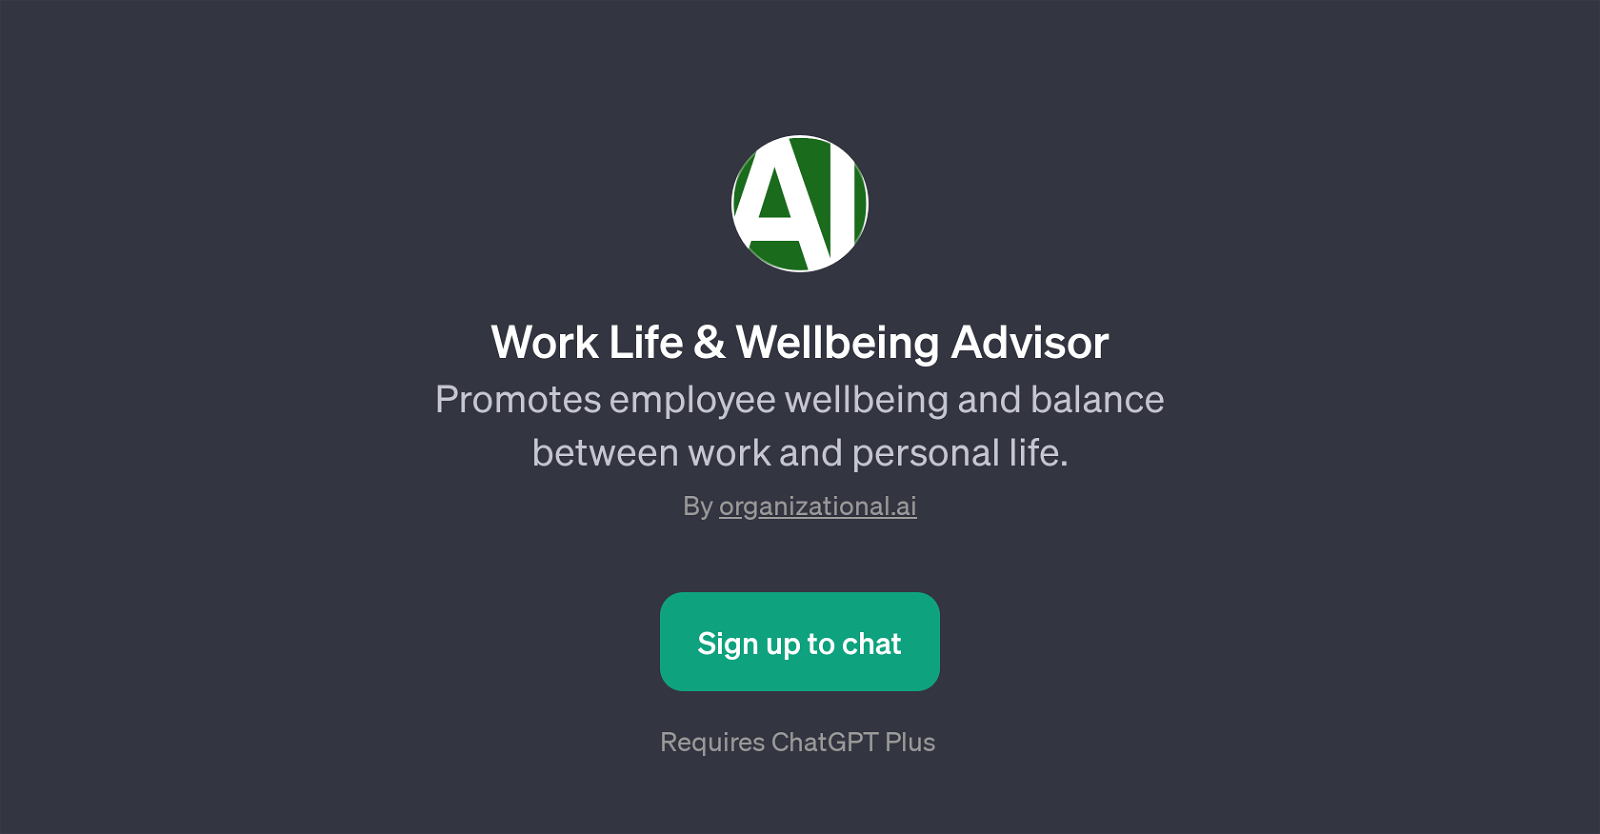 Work Life & Wellbeing Advisor website